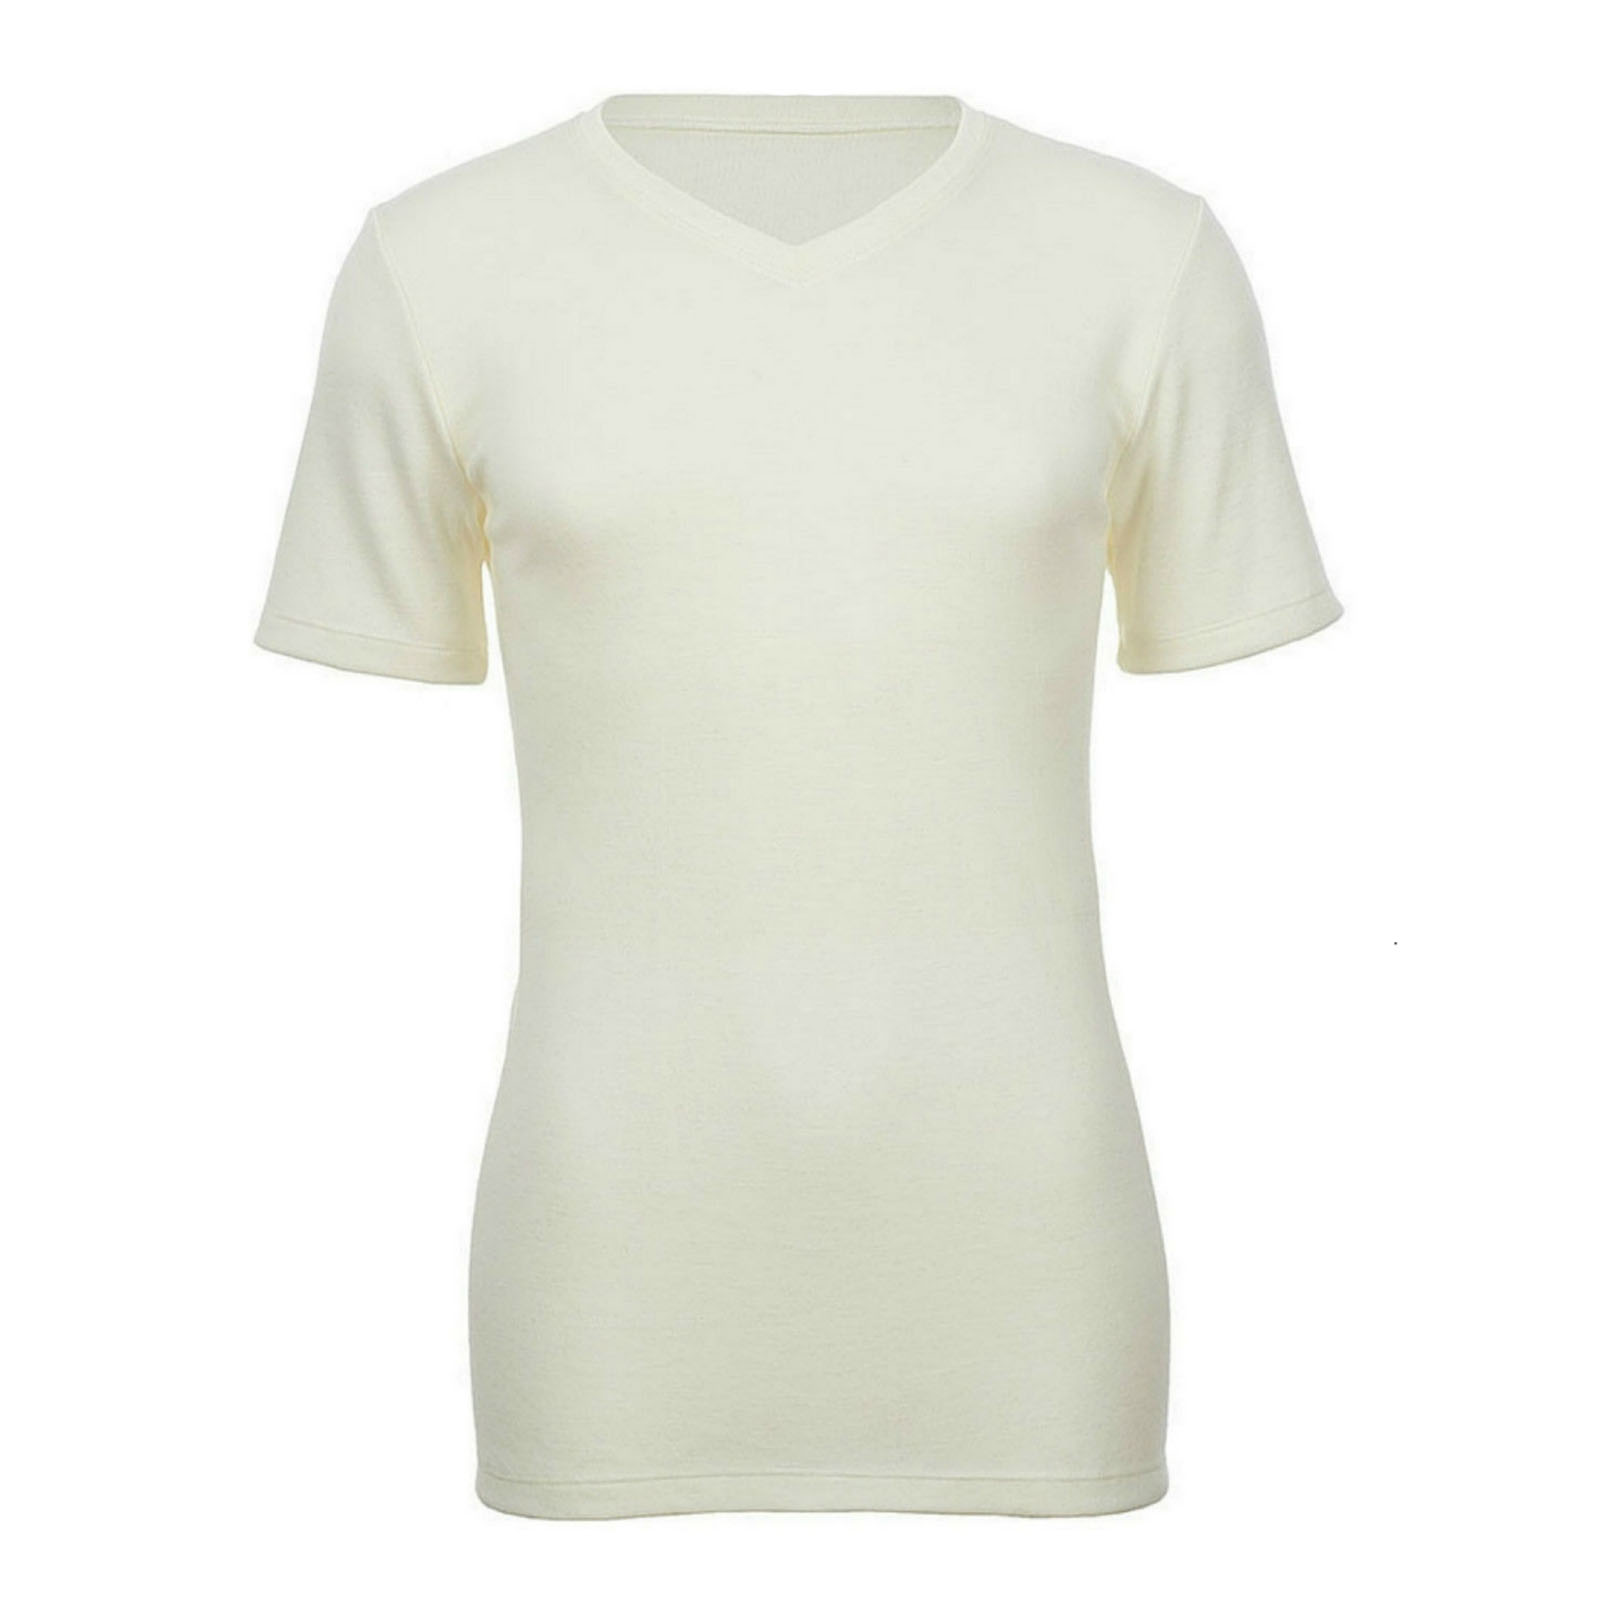 Men's 100% Pure Merino Wool V-Neck Short Sleeve Top T Shirt Thermal